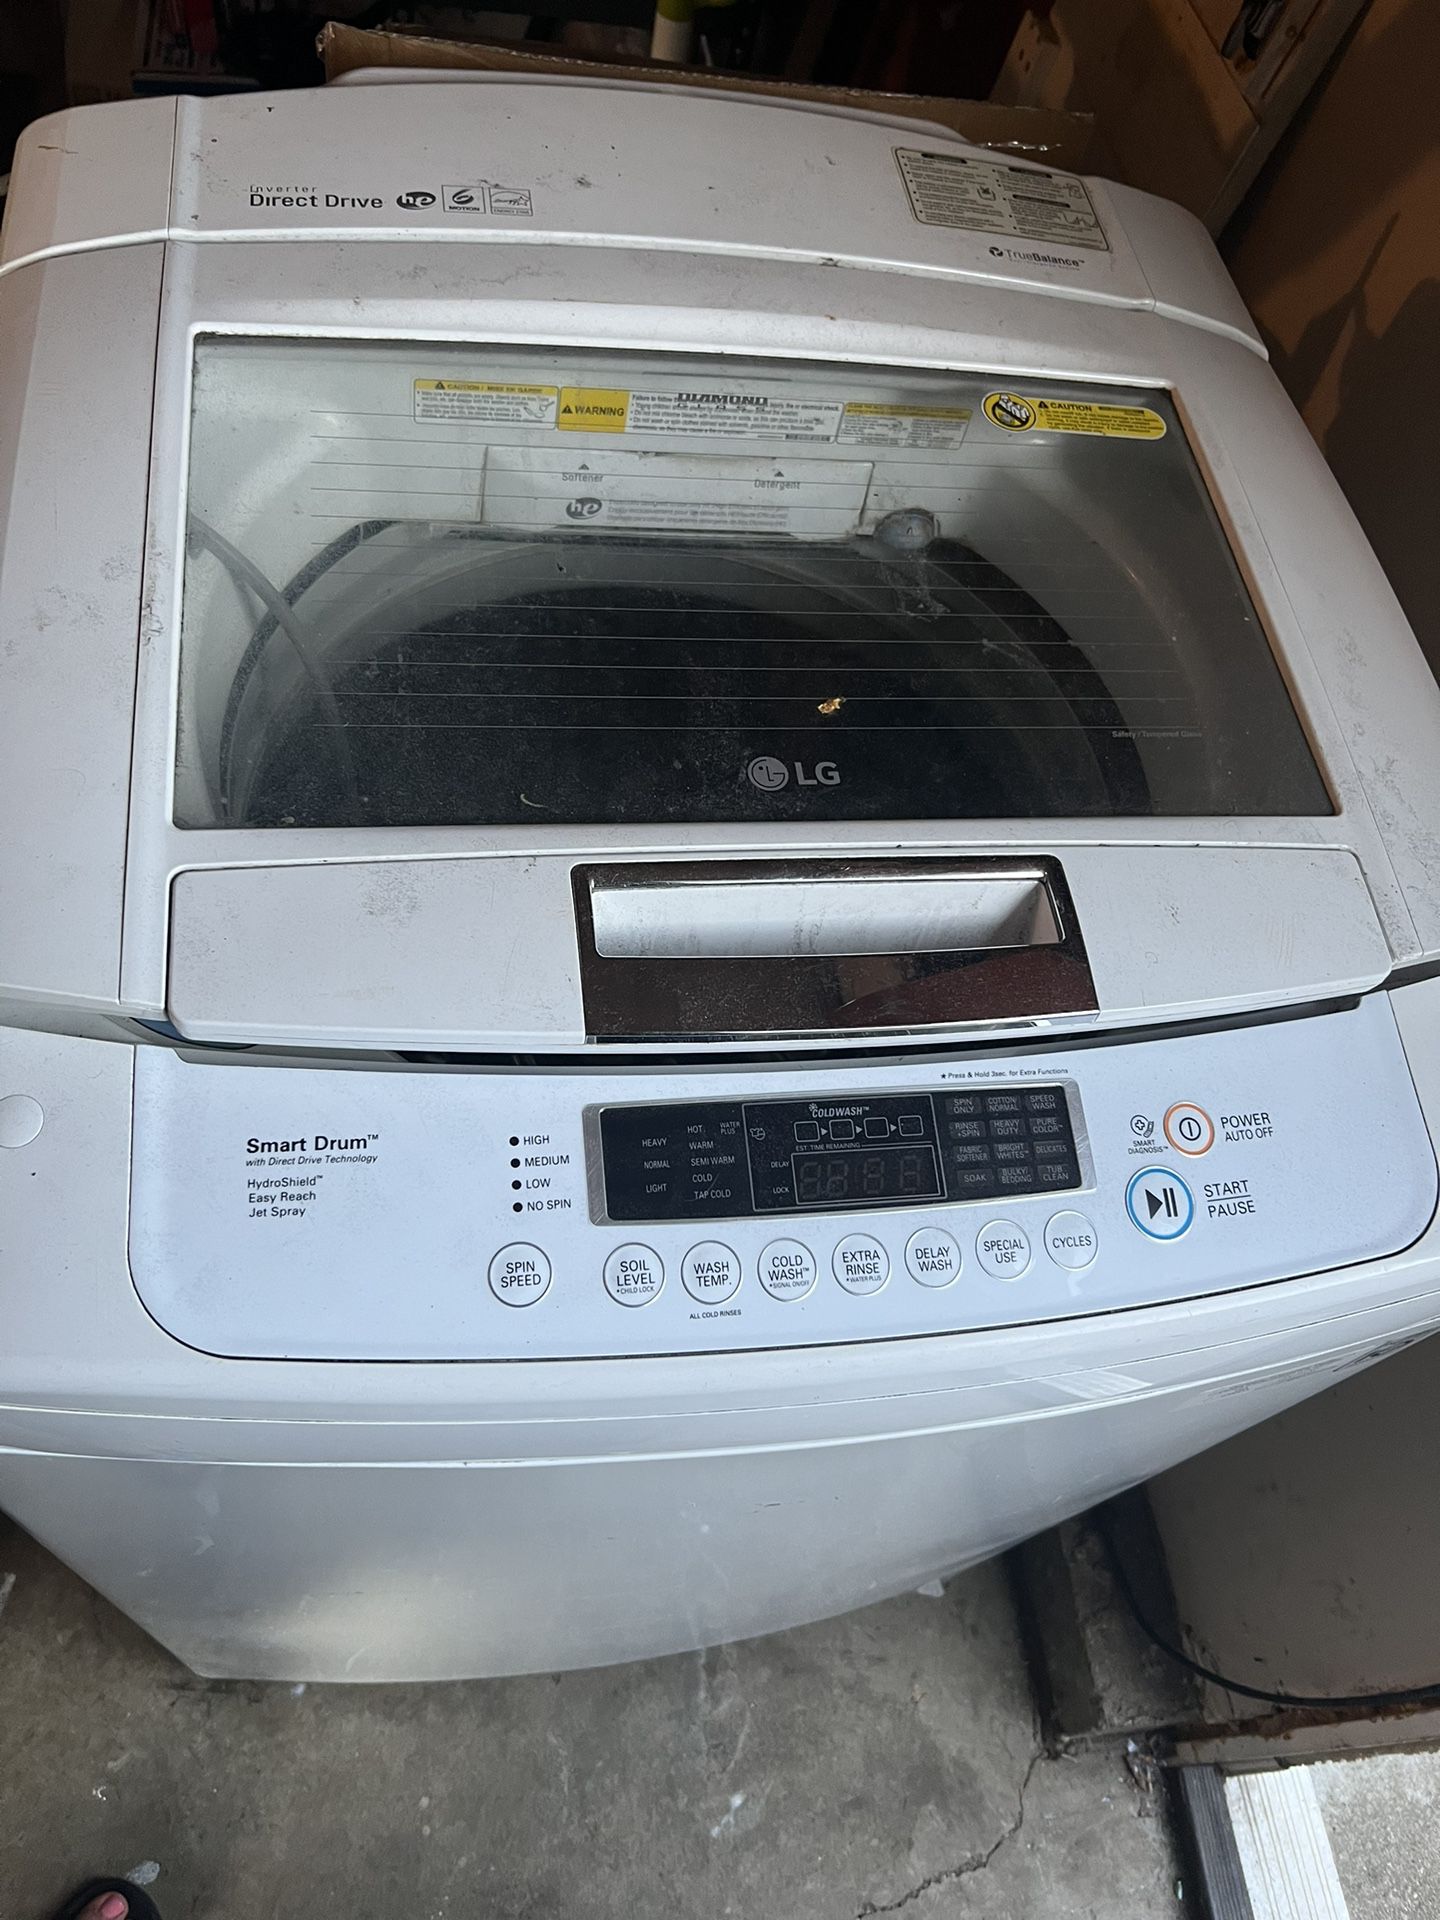 LG washing Machine Only. Used